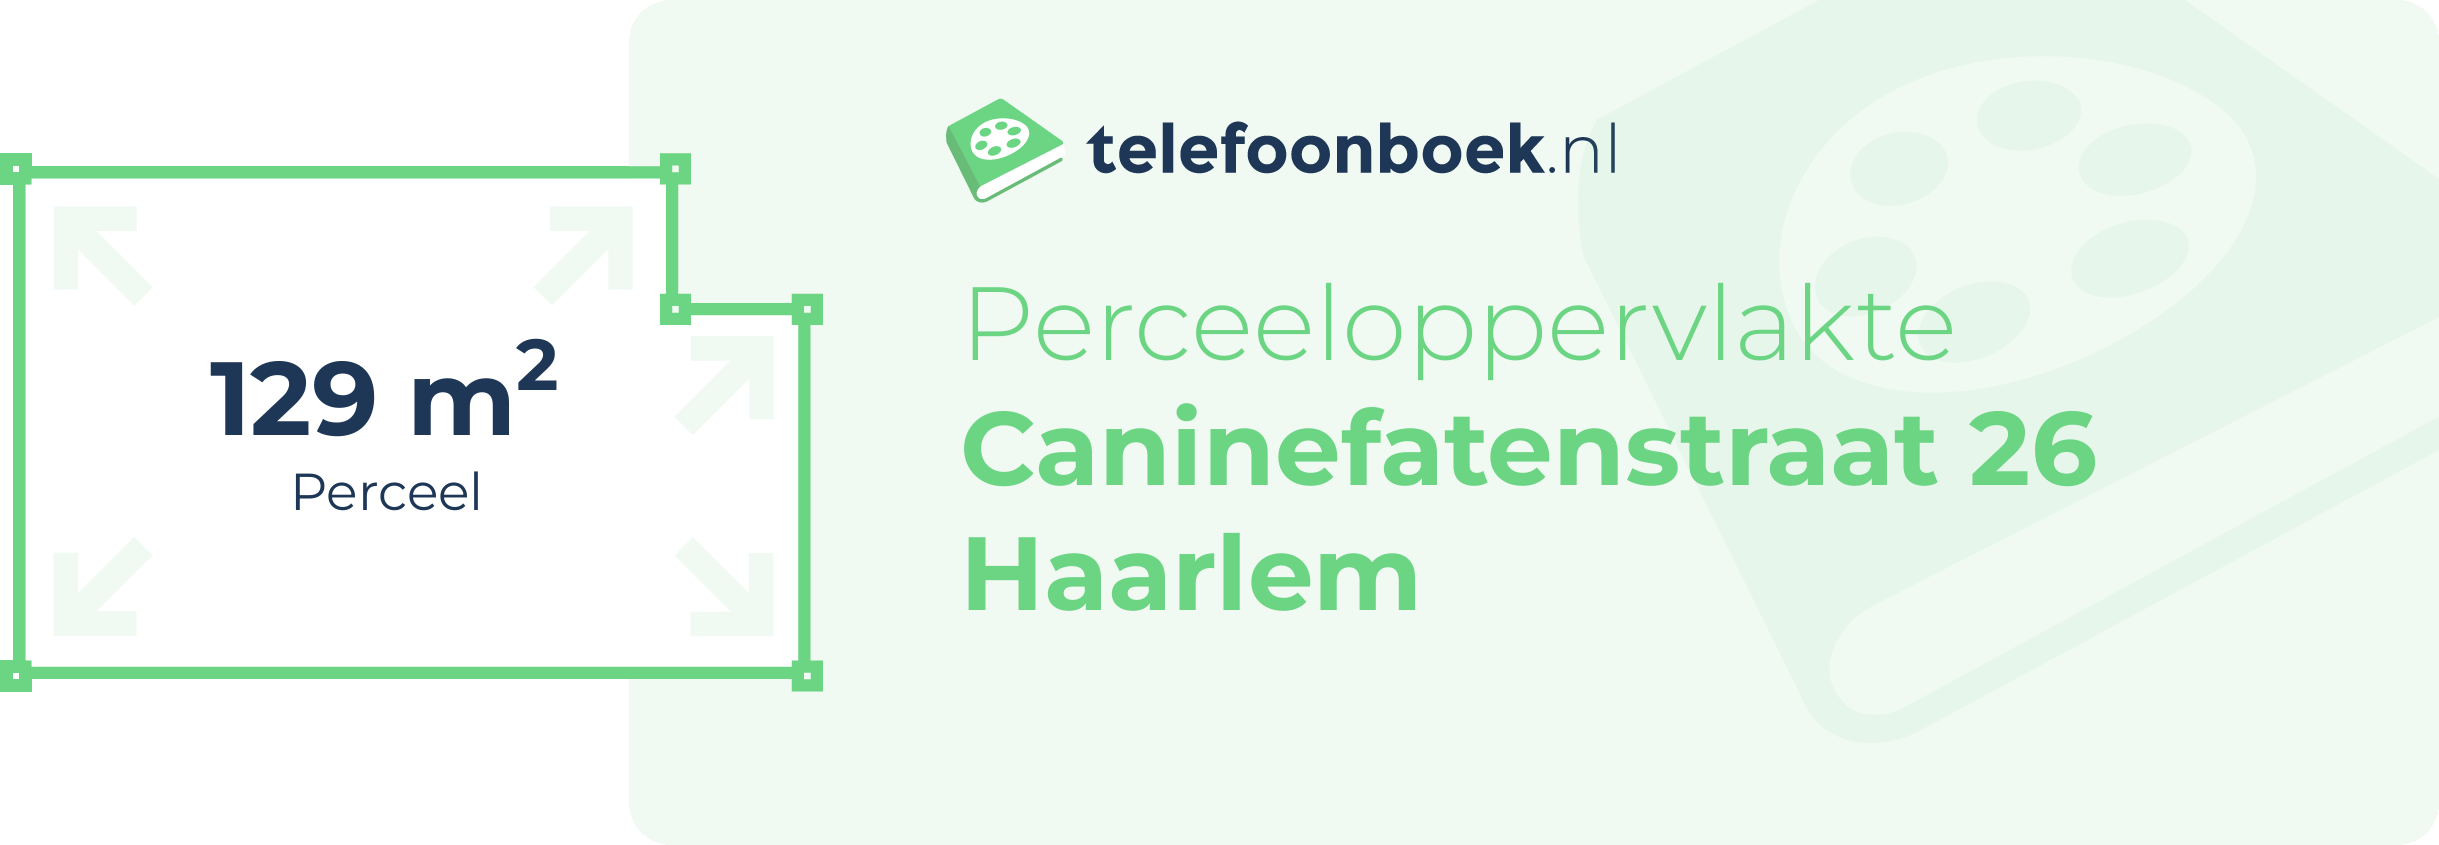 Perceeloppervlakte Caninefatenstraat 26 Haarlem